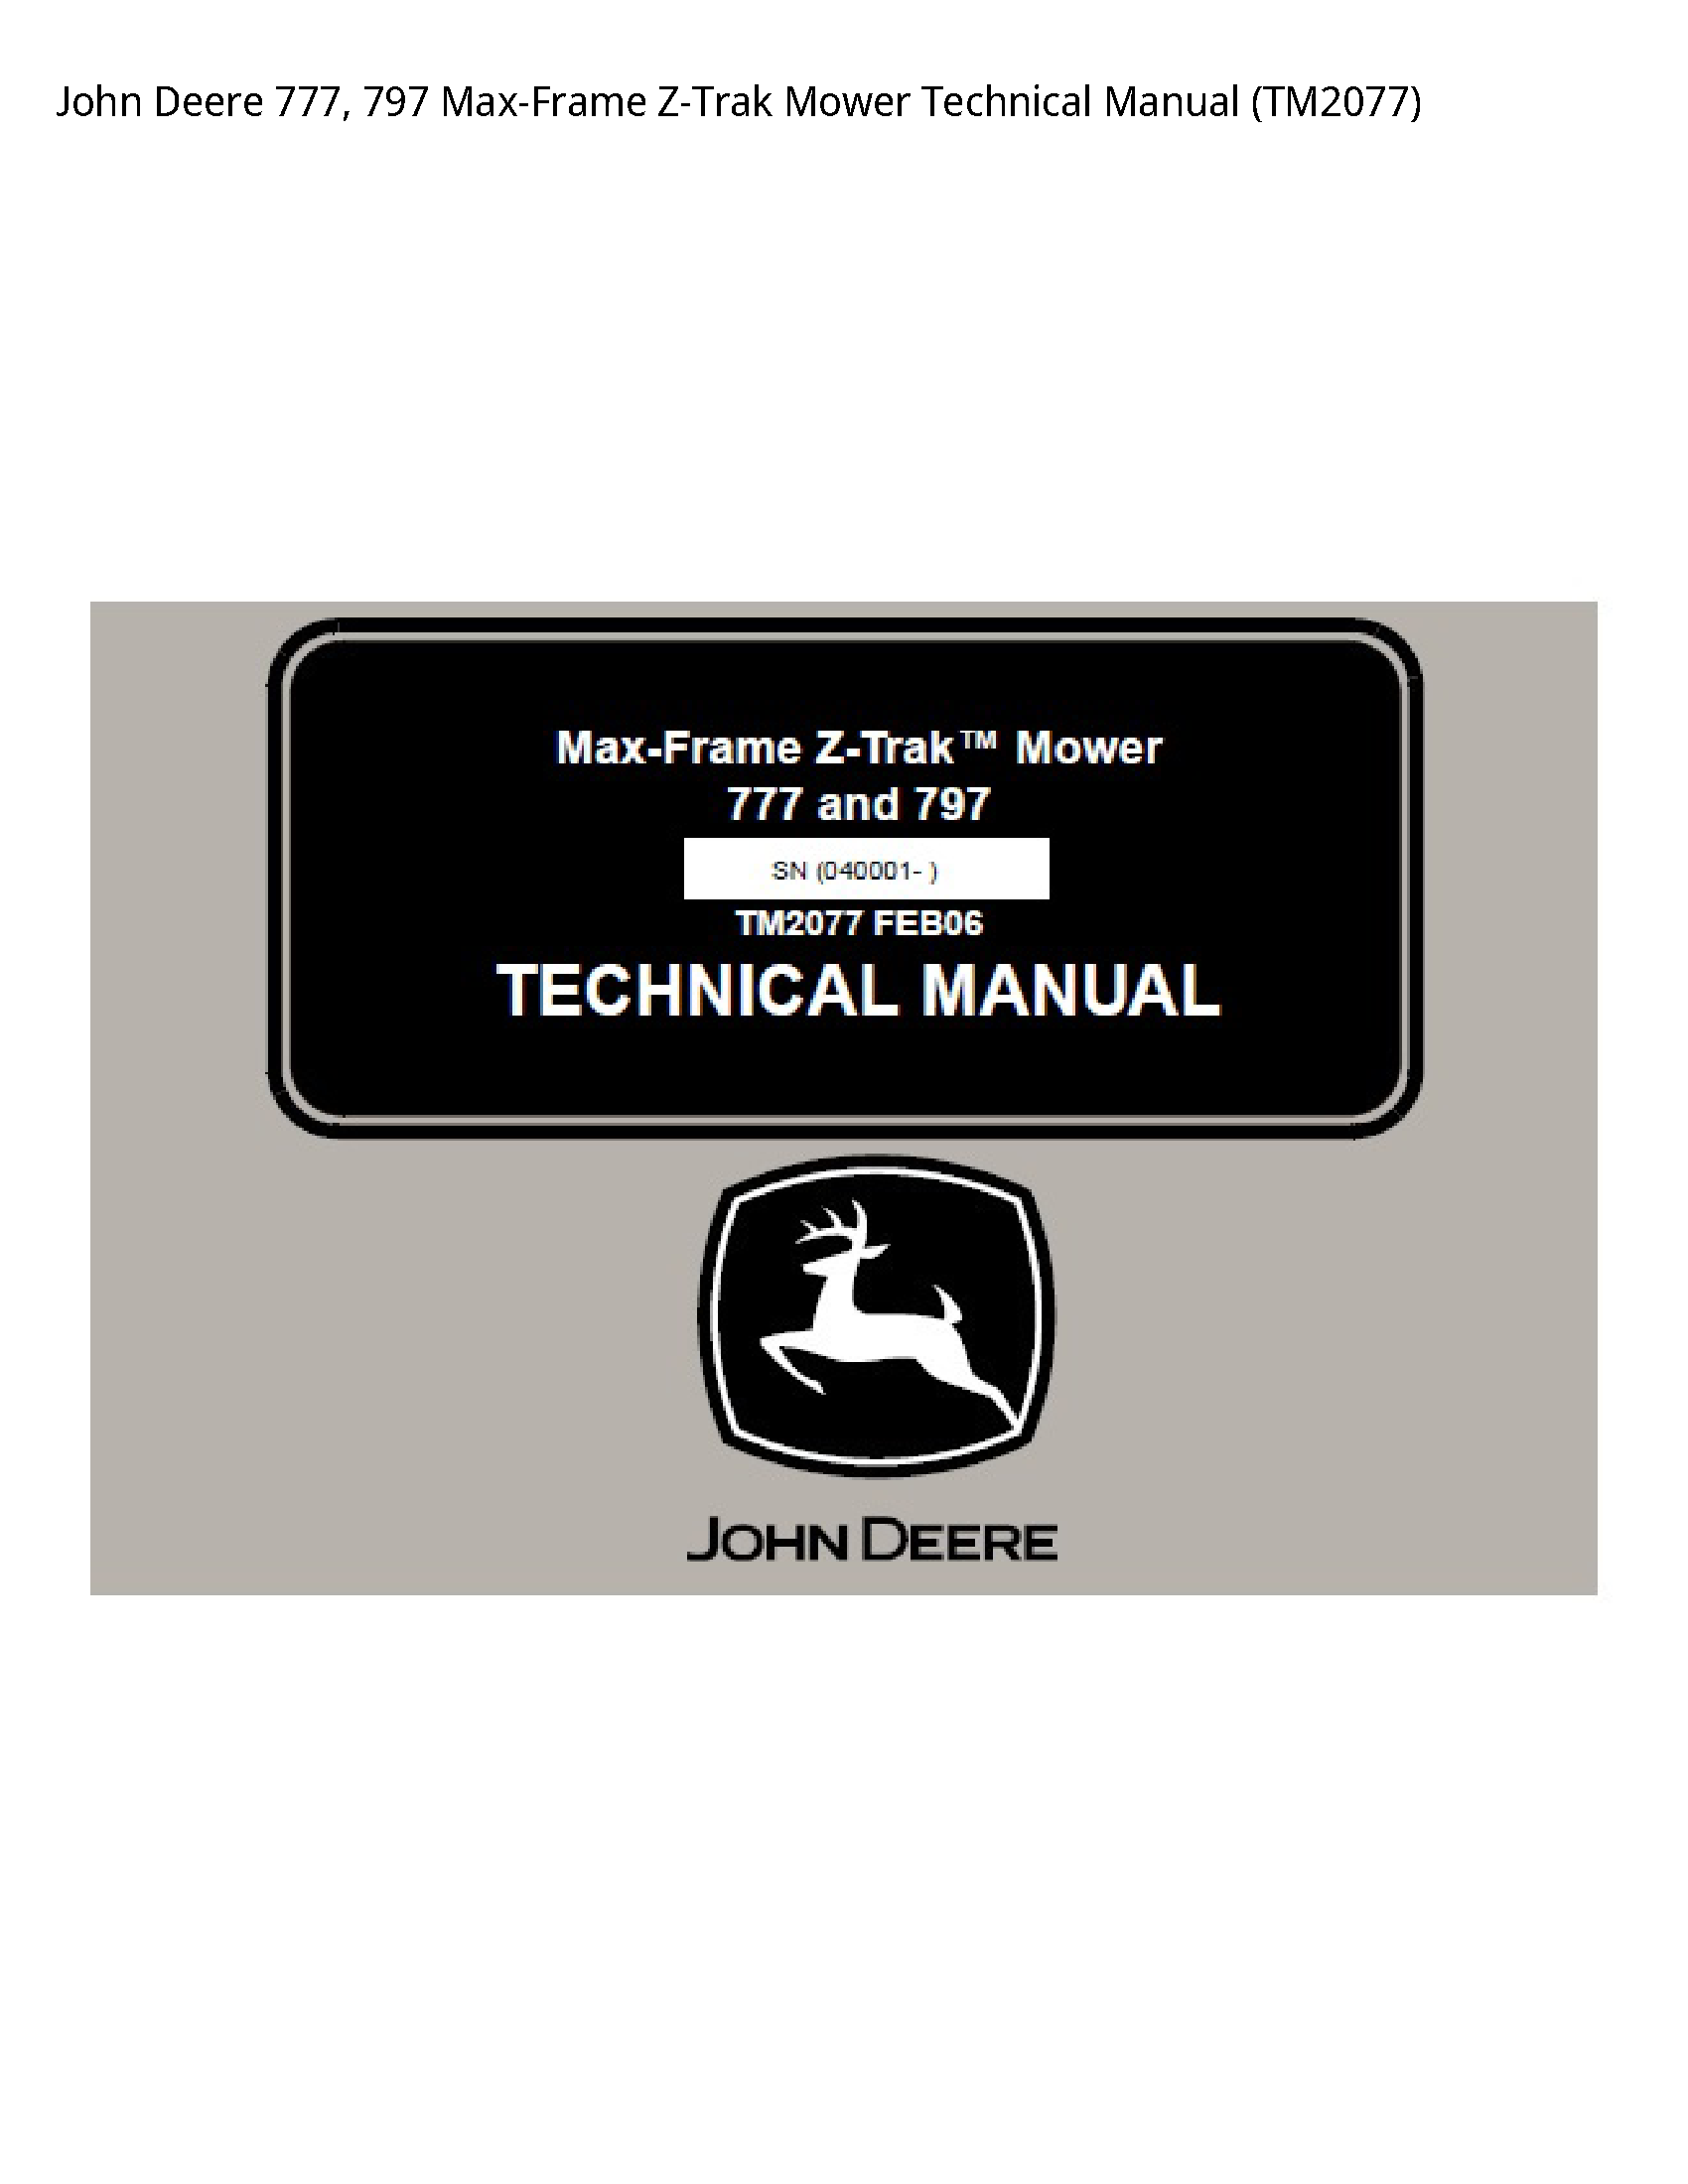 John Deere 777 Max-Frame Z-Trak Mower Technical manual